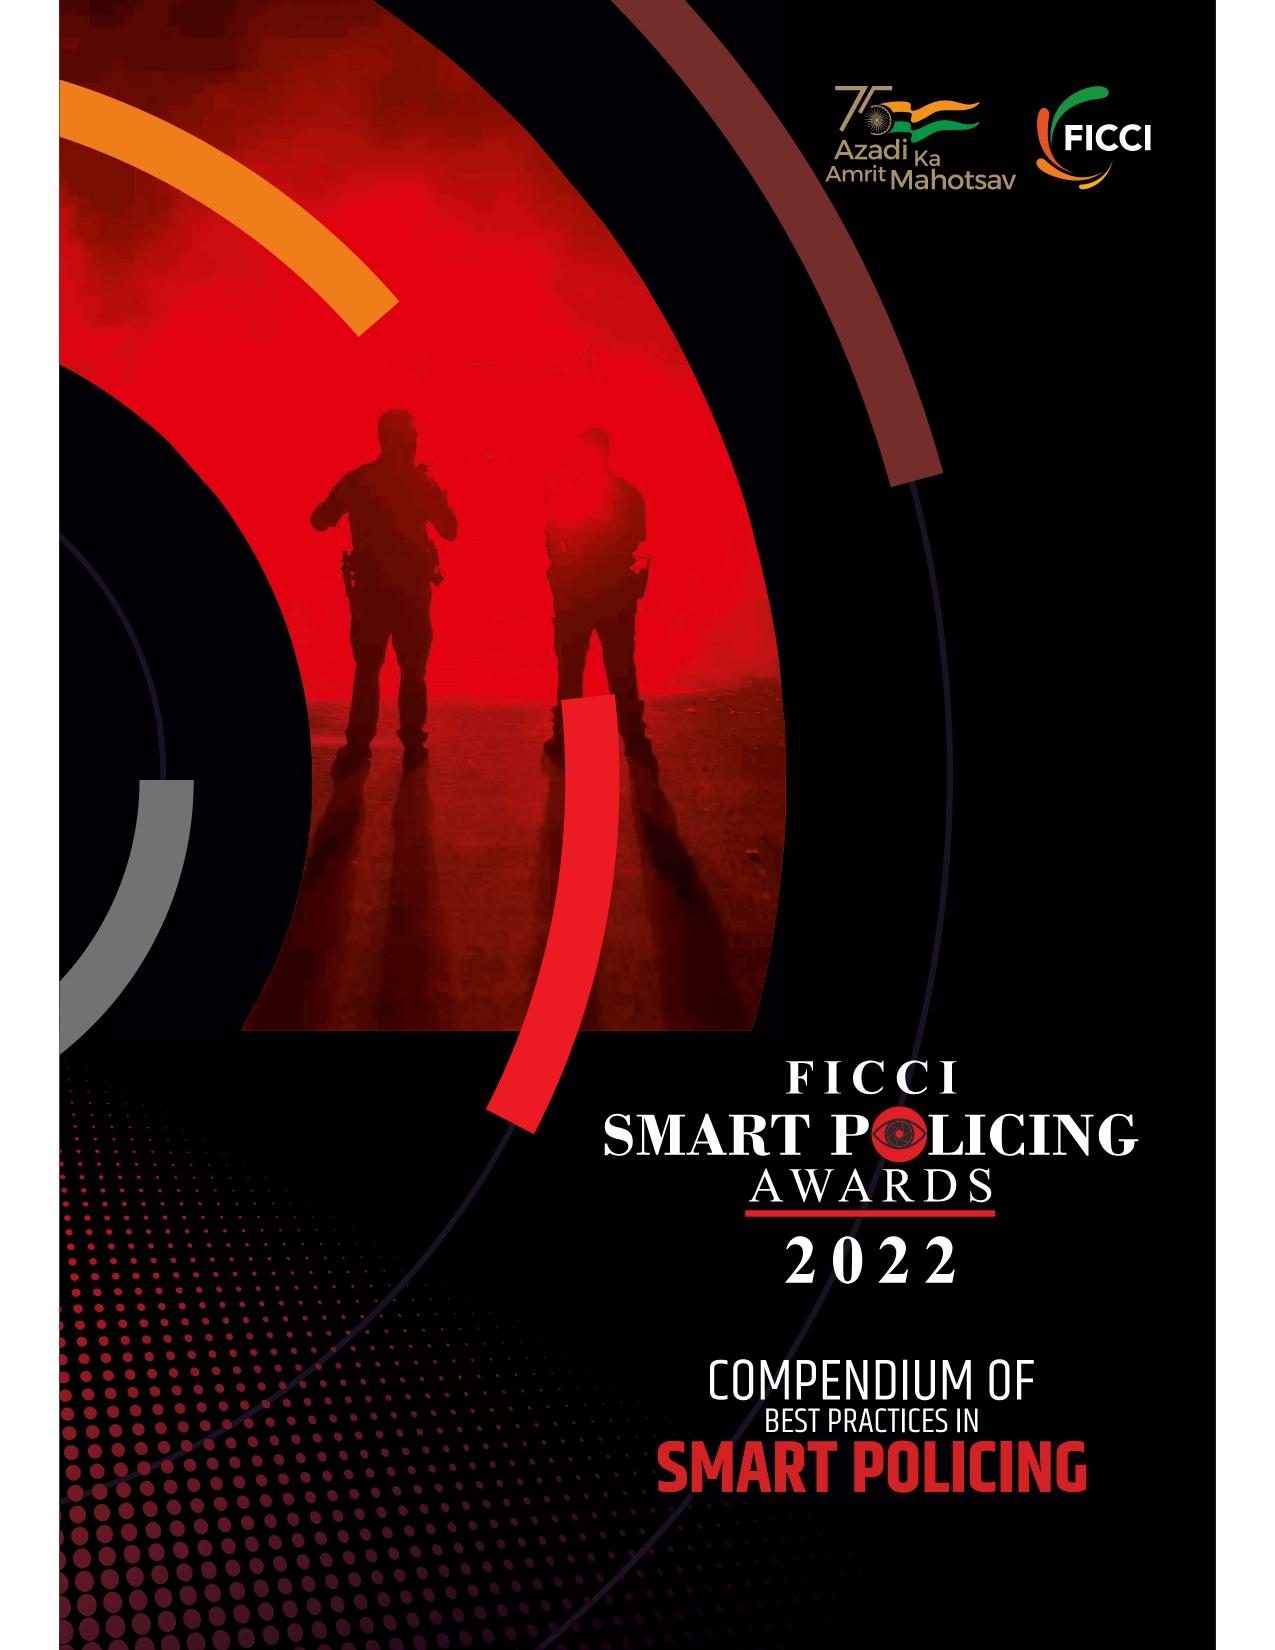 FICCI Compendium of Best Practices in Smart Policing 2022